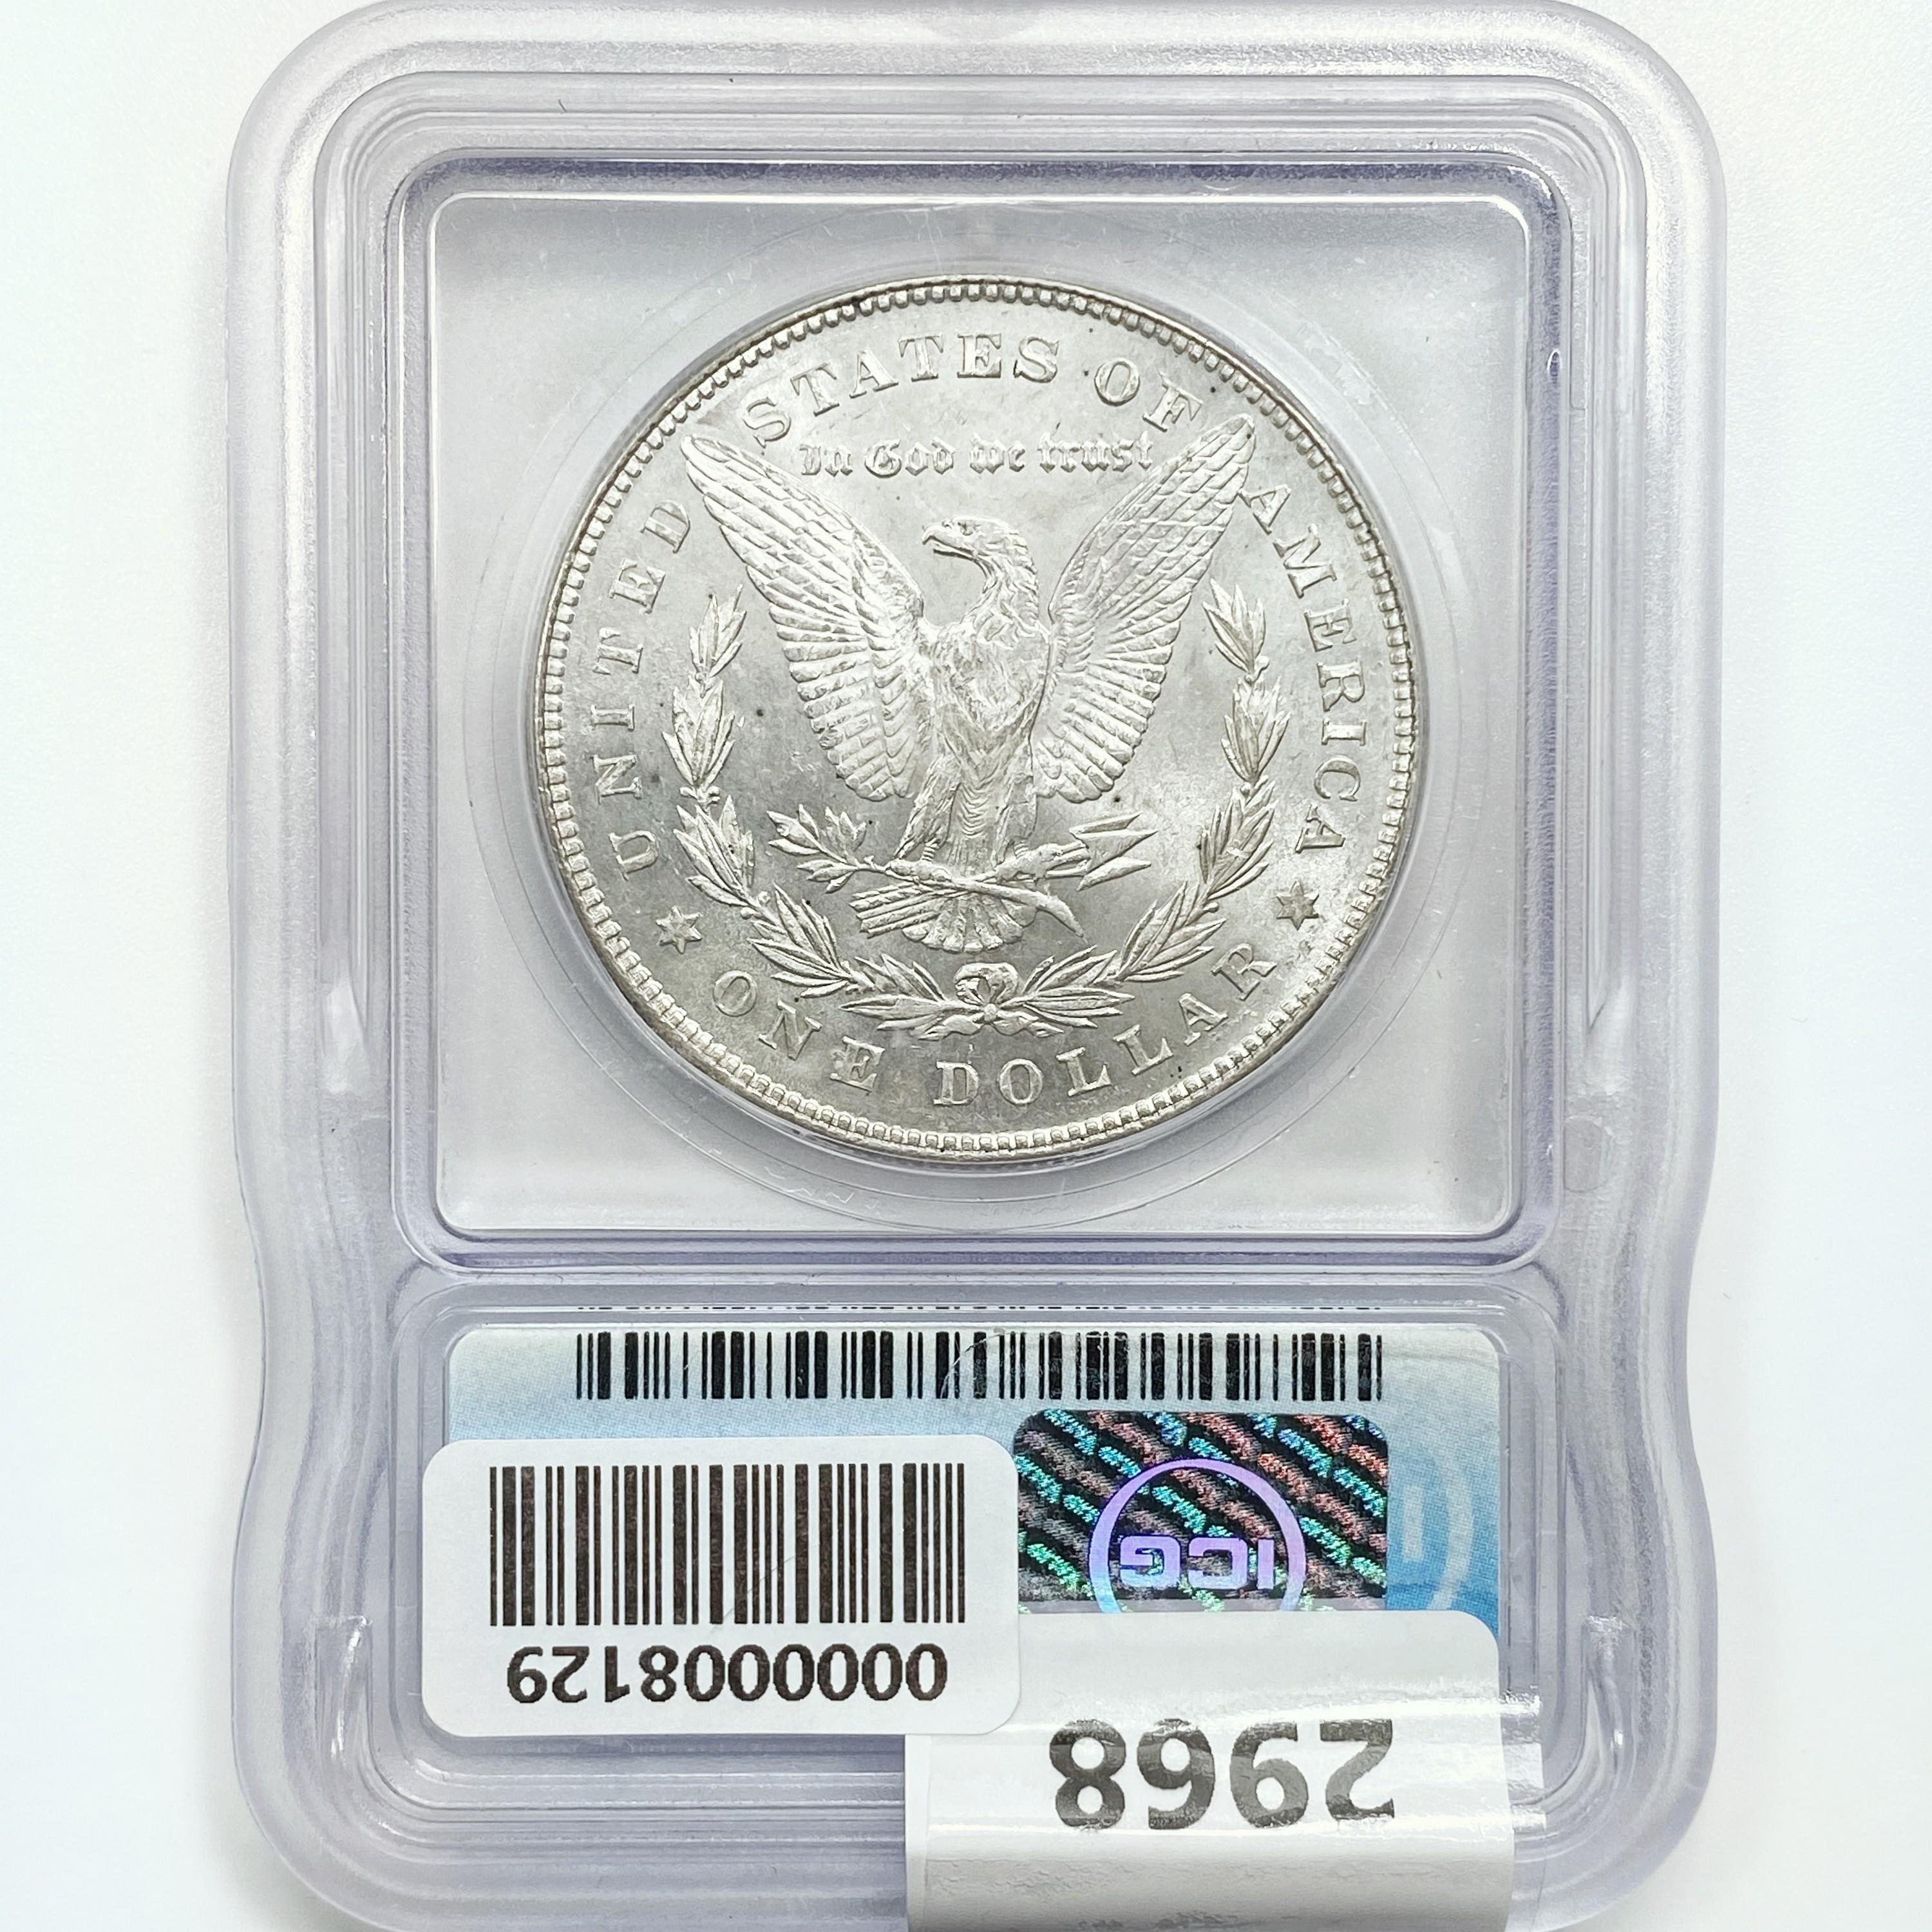 1878 7TF Morgan Silver Dollar ICG MS64